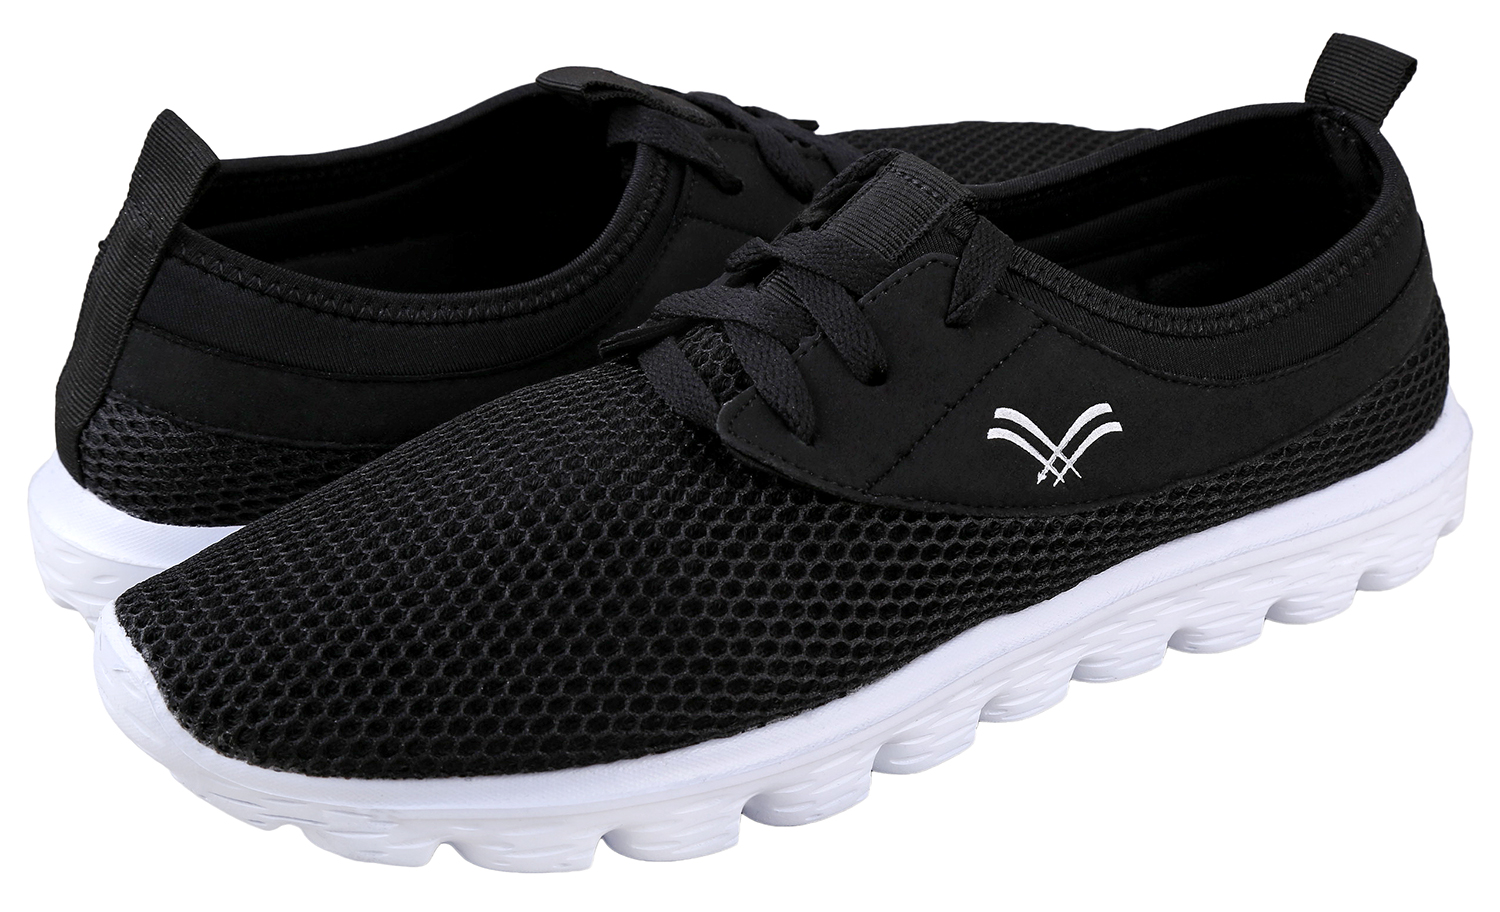 Urban Fox Men's Breeze Lightweight Shoes | Lightweight Shoes for Men | Casual Shoes | Walking Shoes for Men | Black/White 9 M US - image 5 of 7